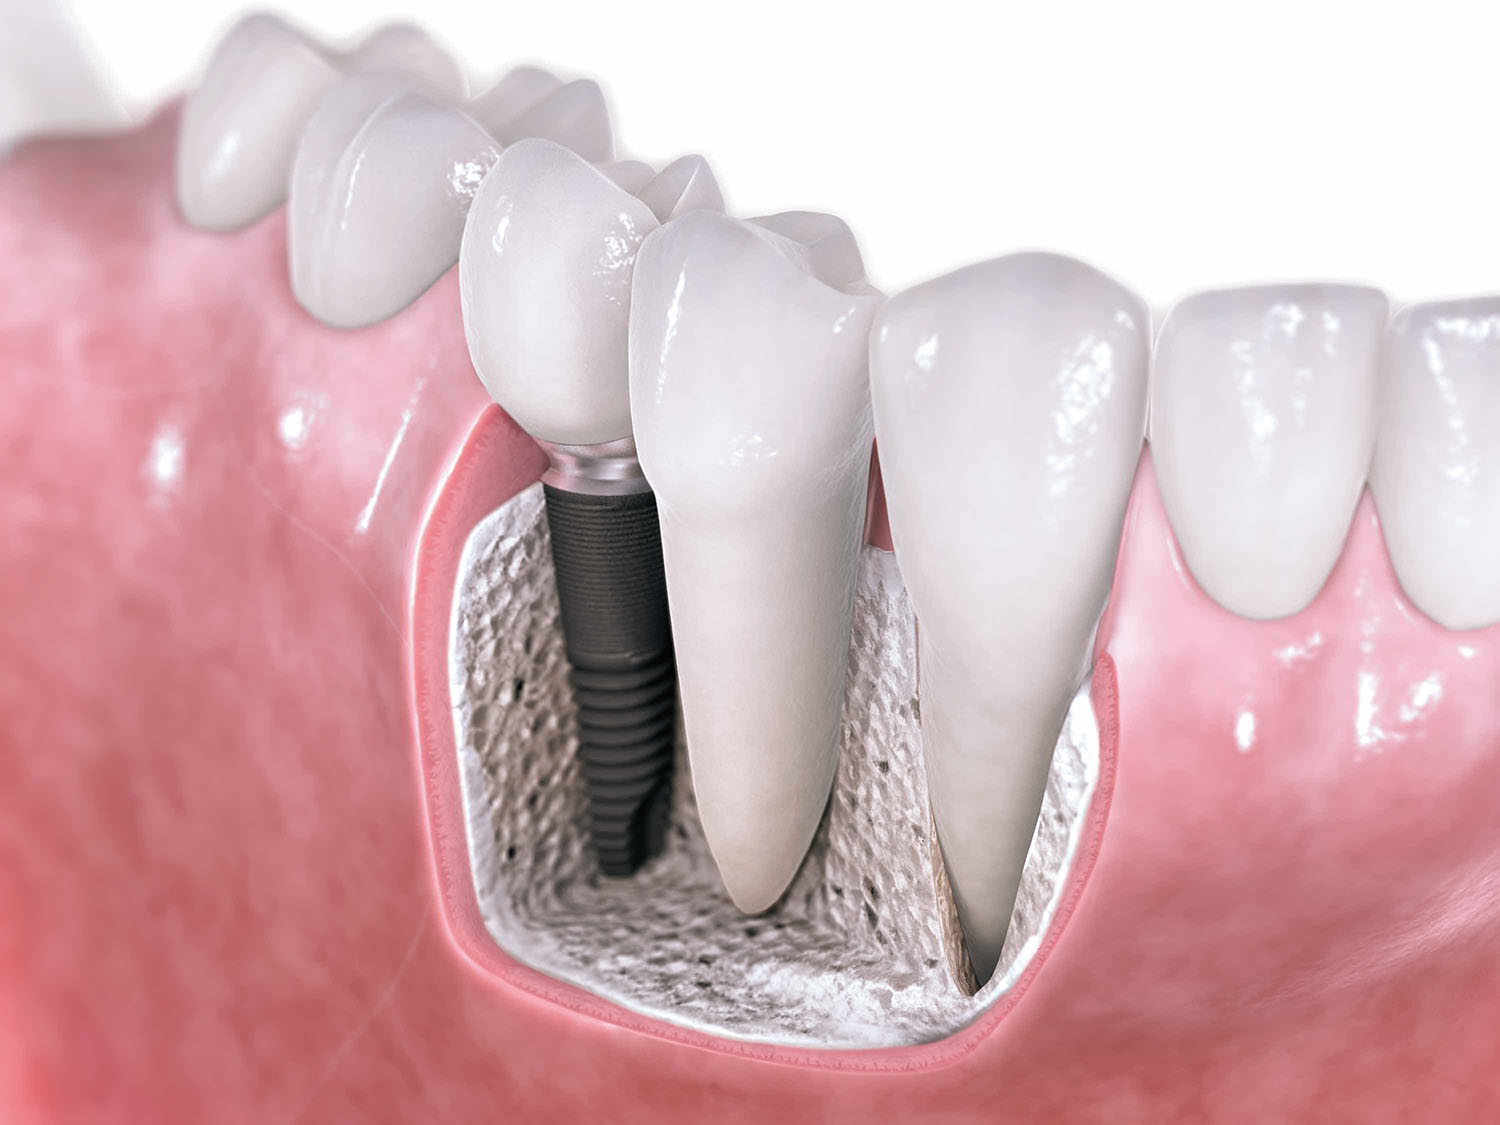 Dental-implants-3D